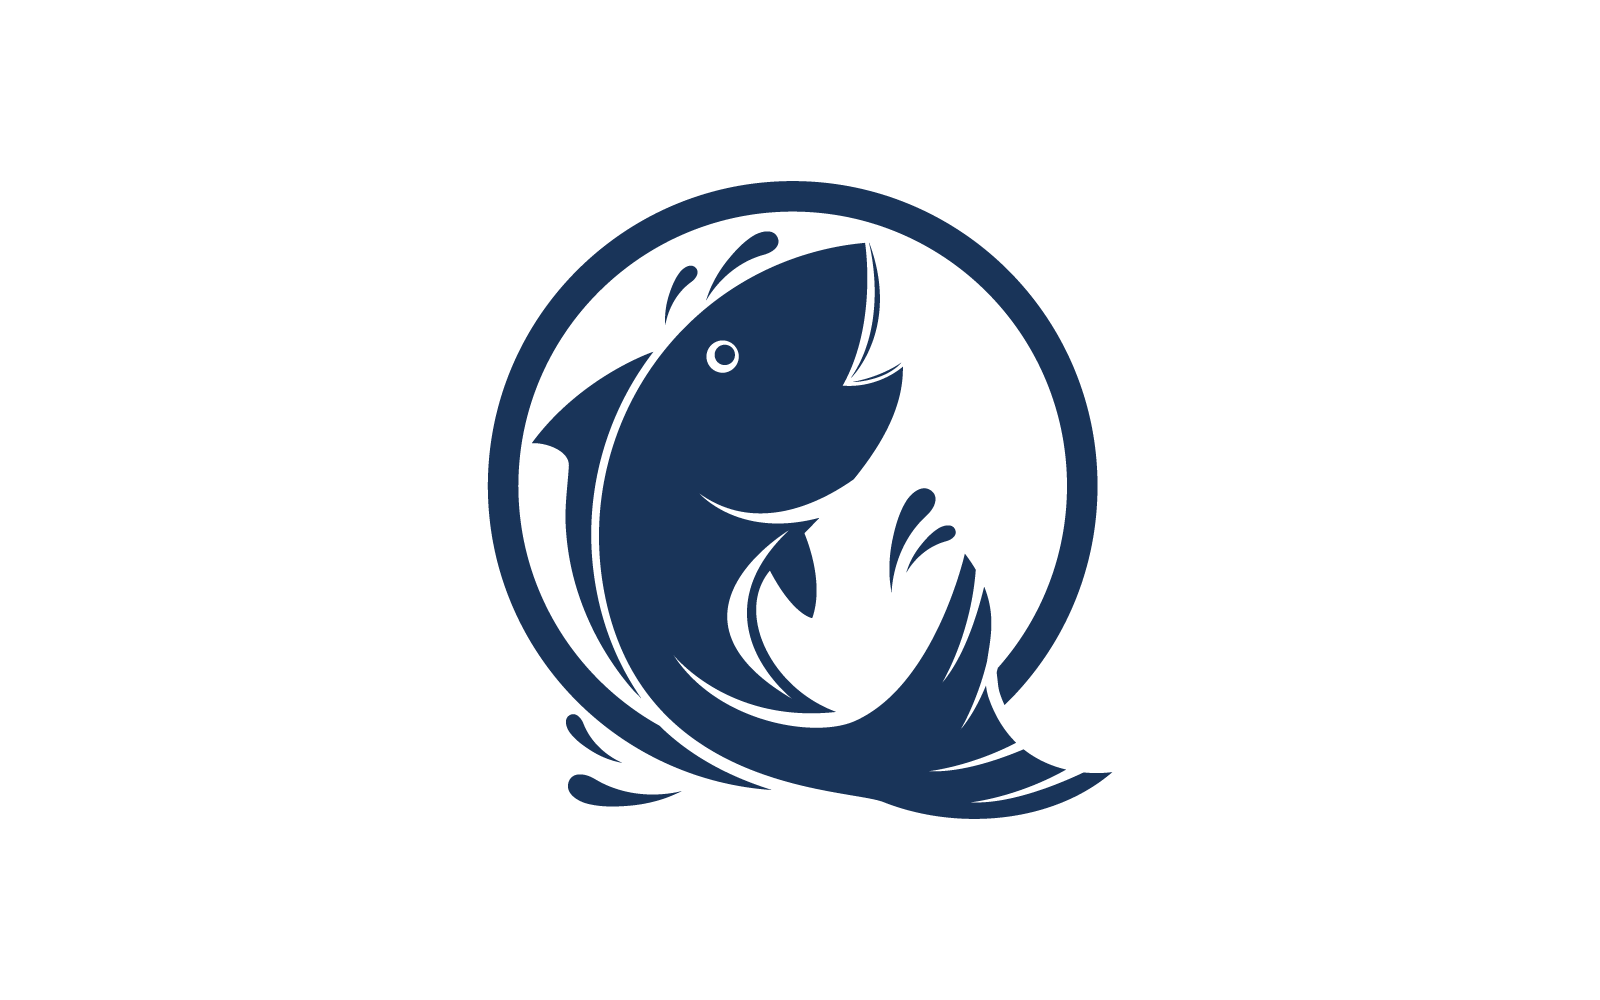 Fish ilustration logo design template